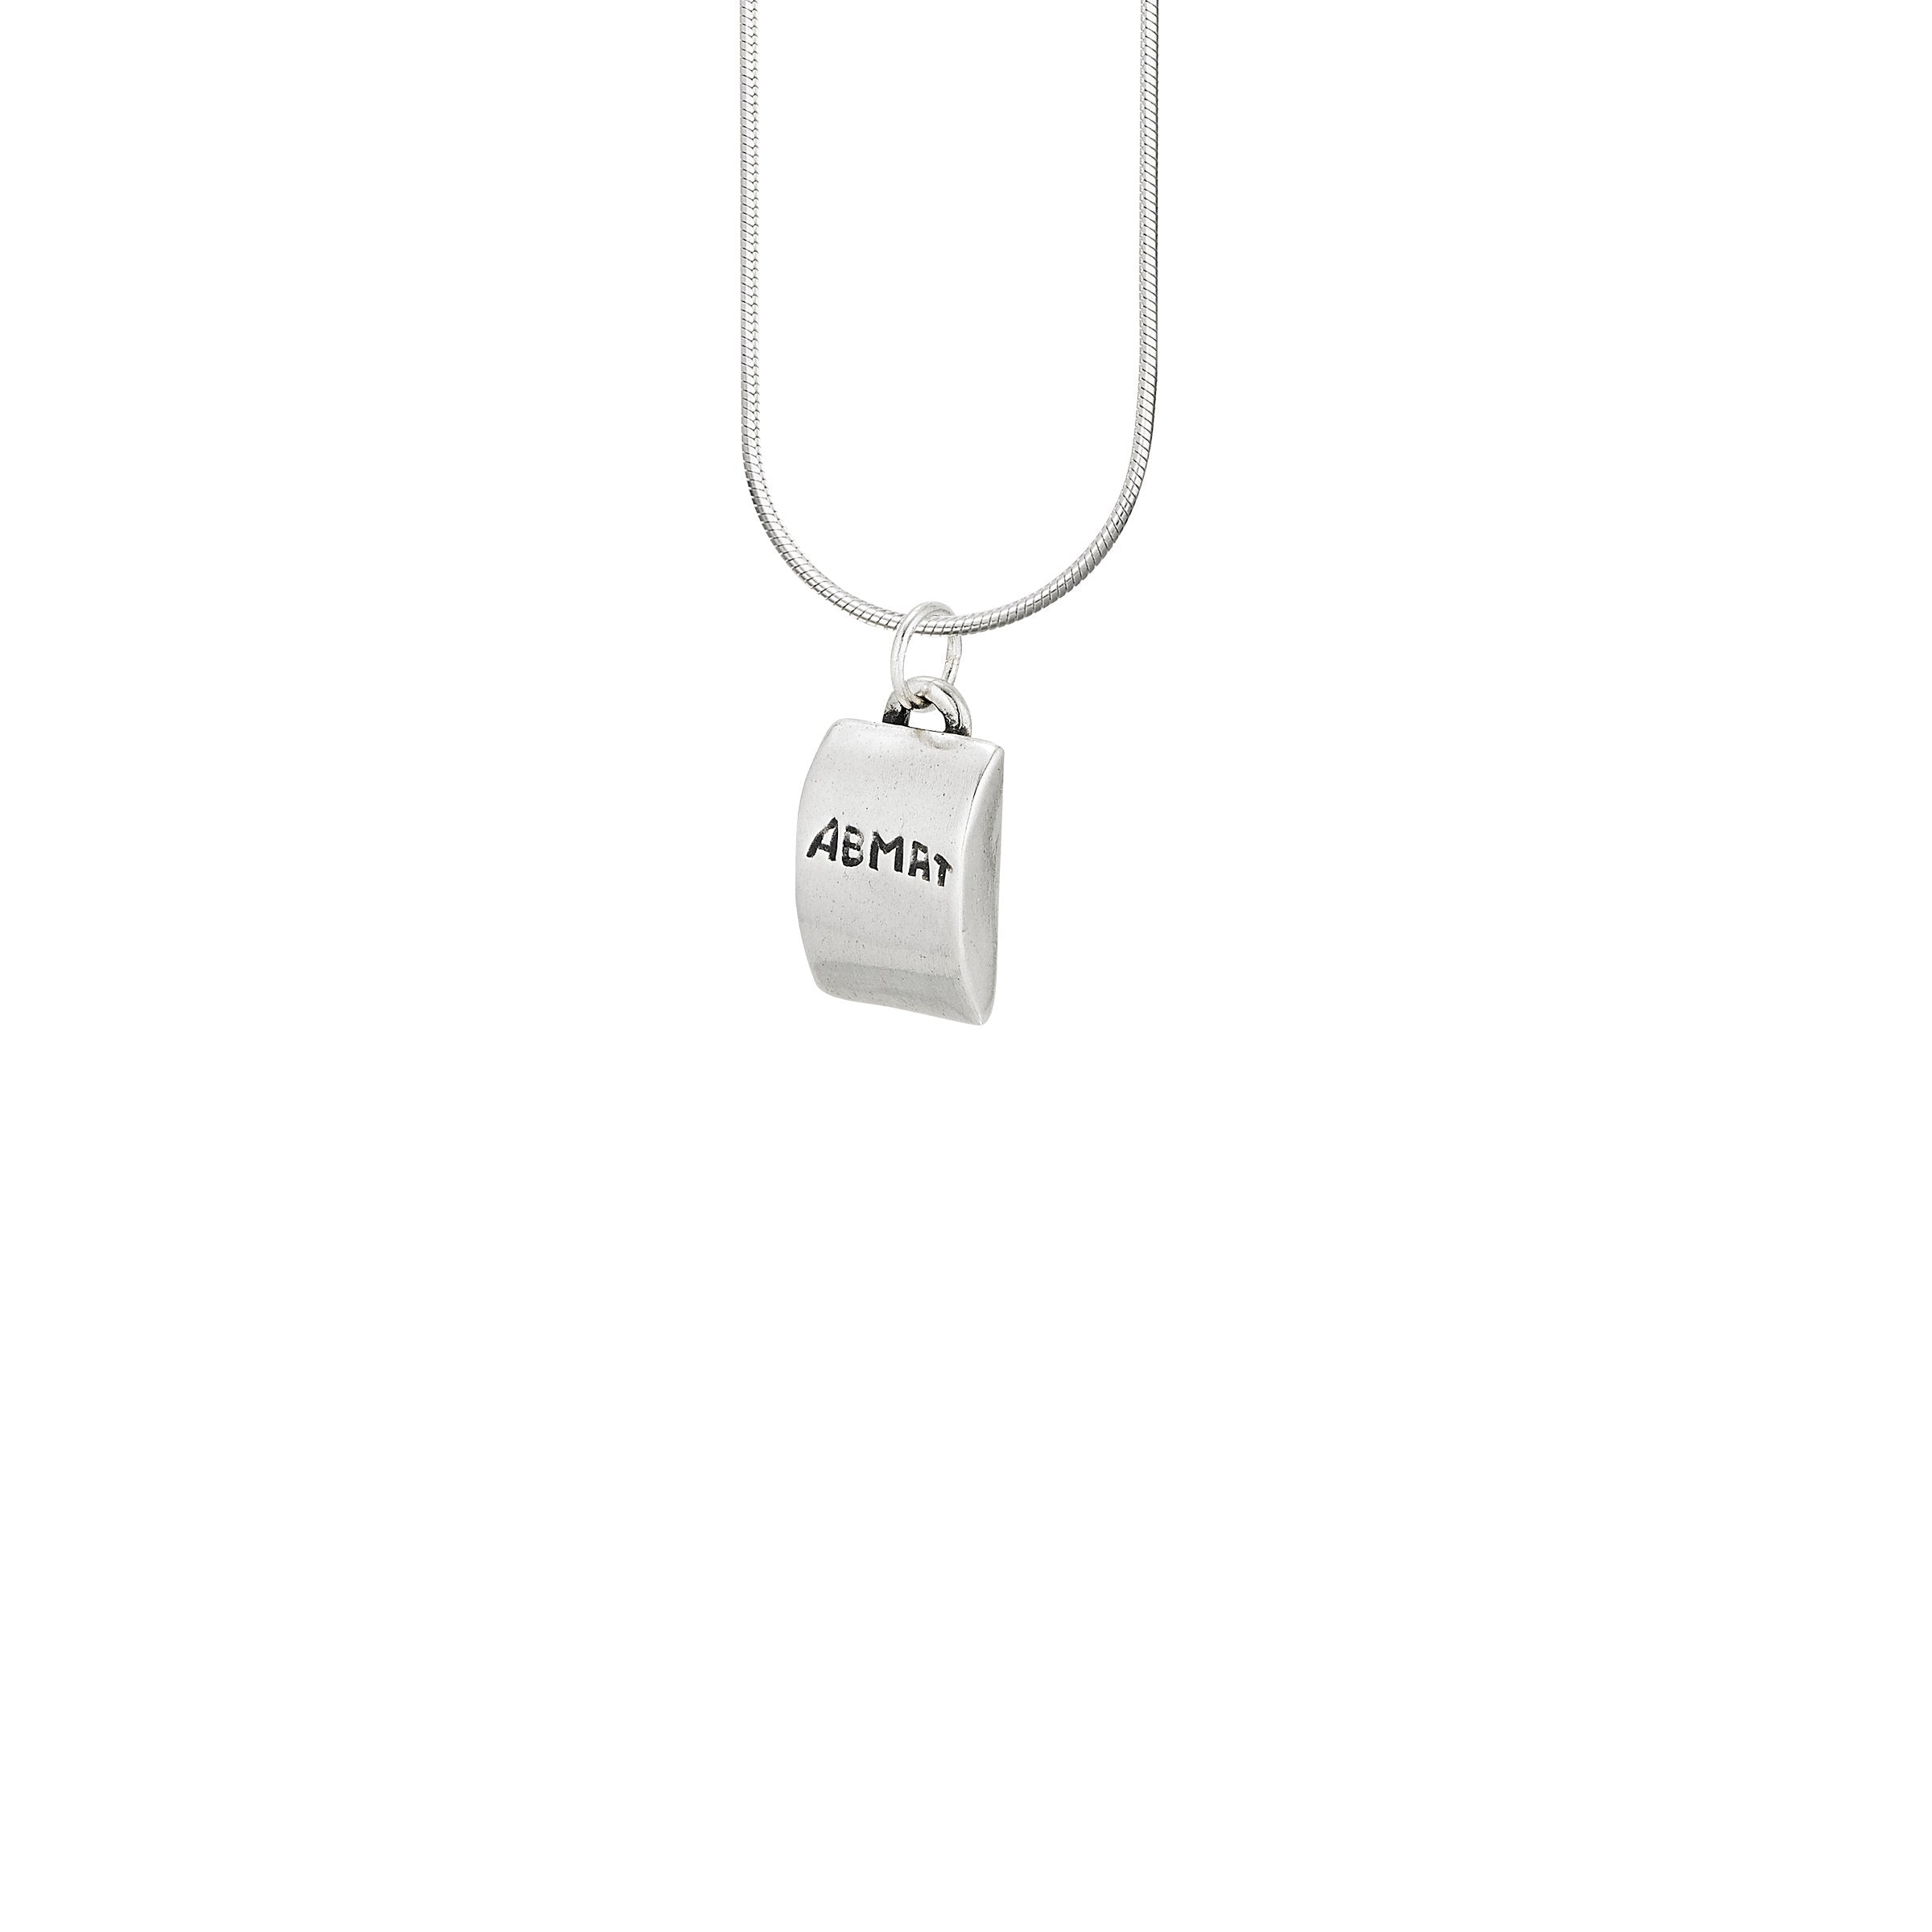 Image of Abmat Crossfit Necklace Pendant